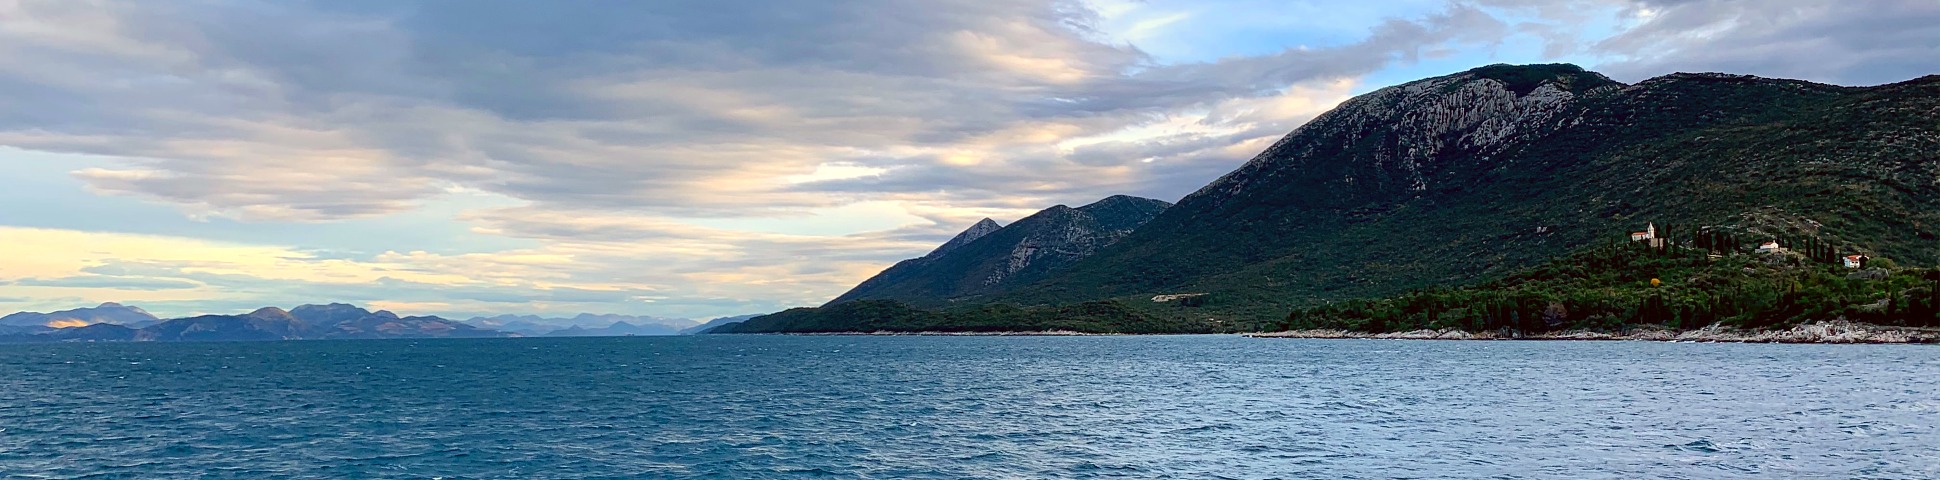 Wide-angle view of the Adriatic Sea and the coast of Croatia